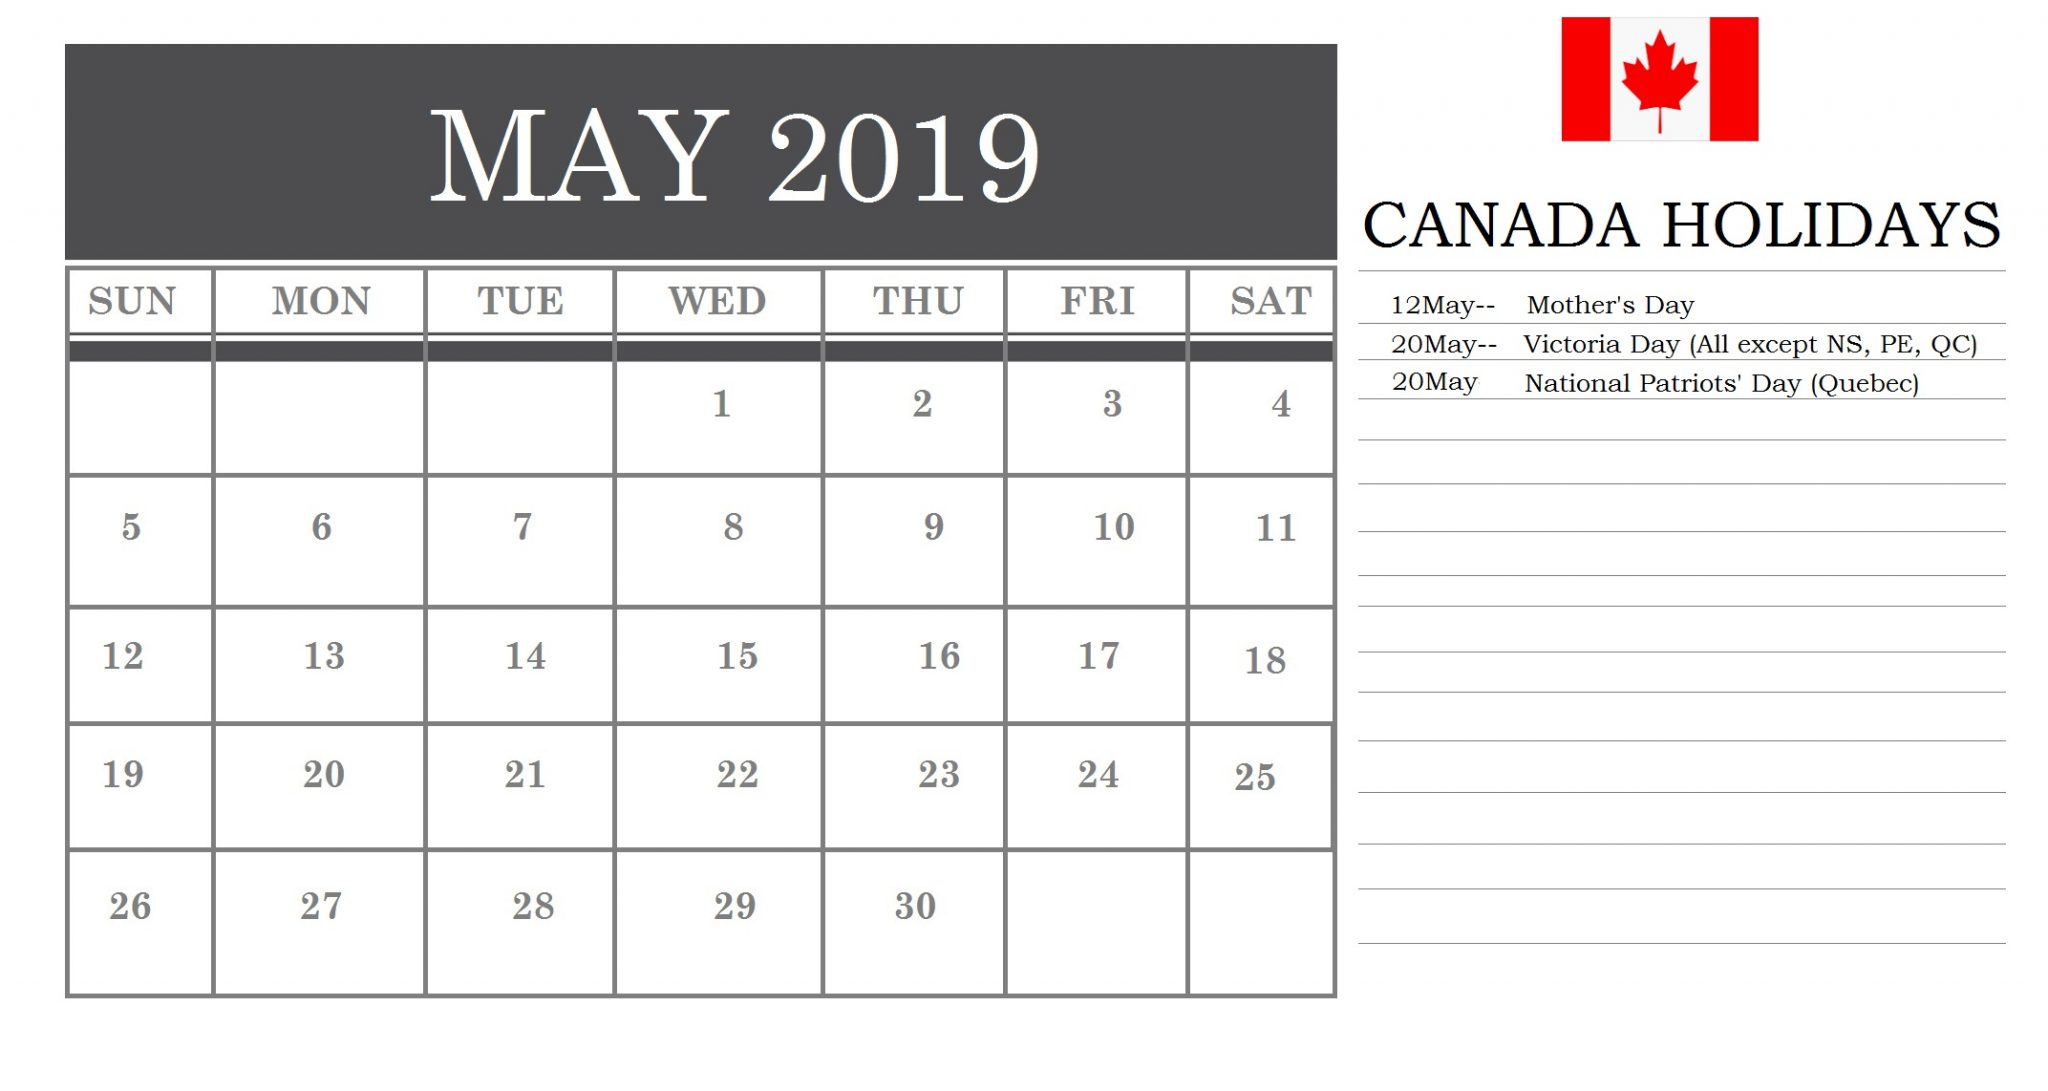 May 2019 Calendar Canada